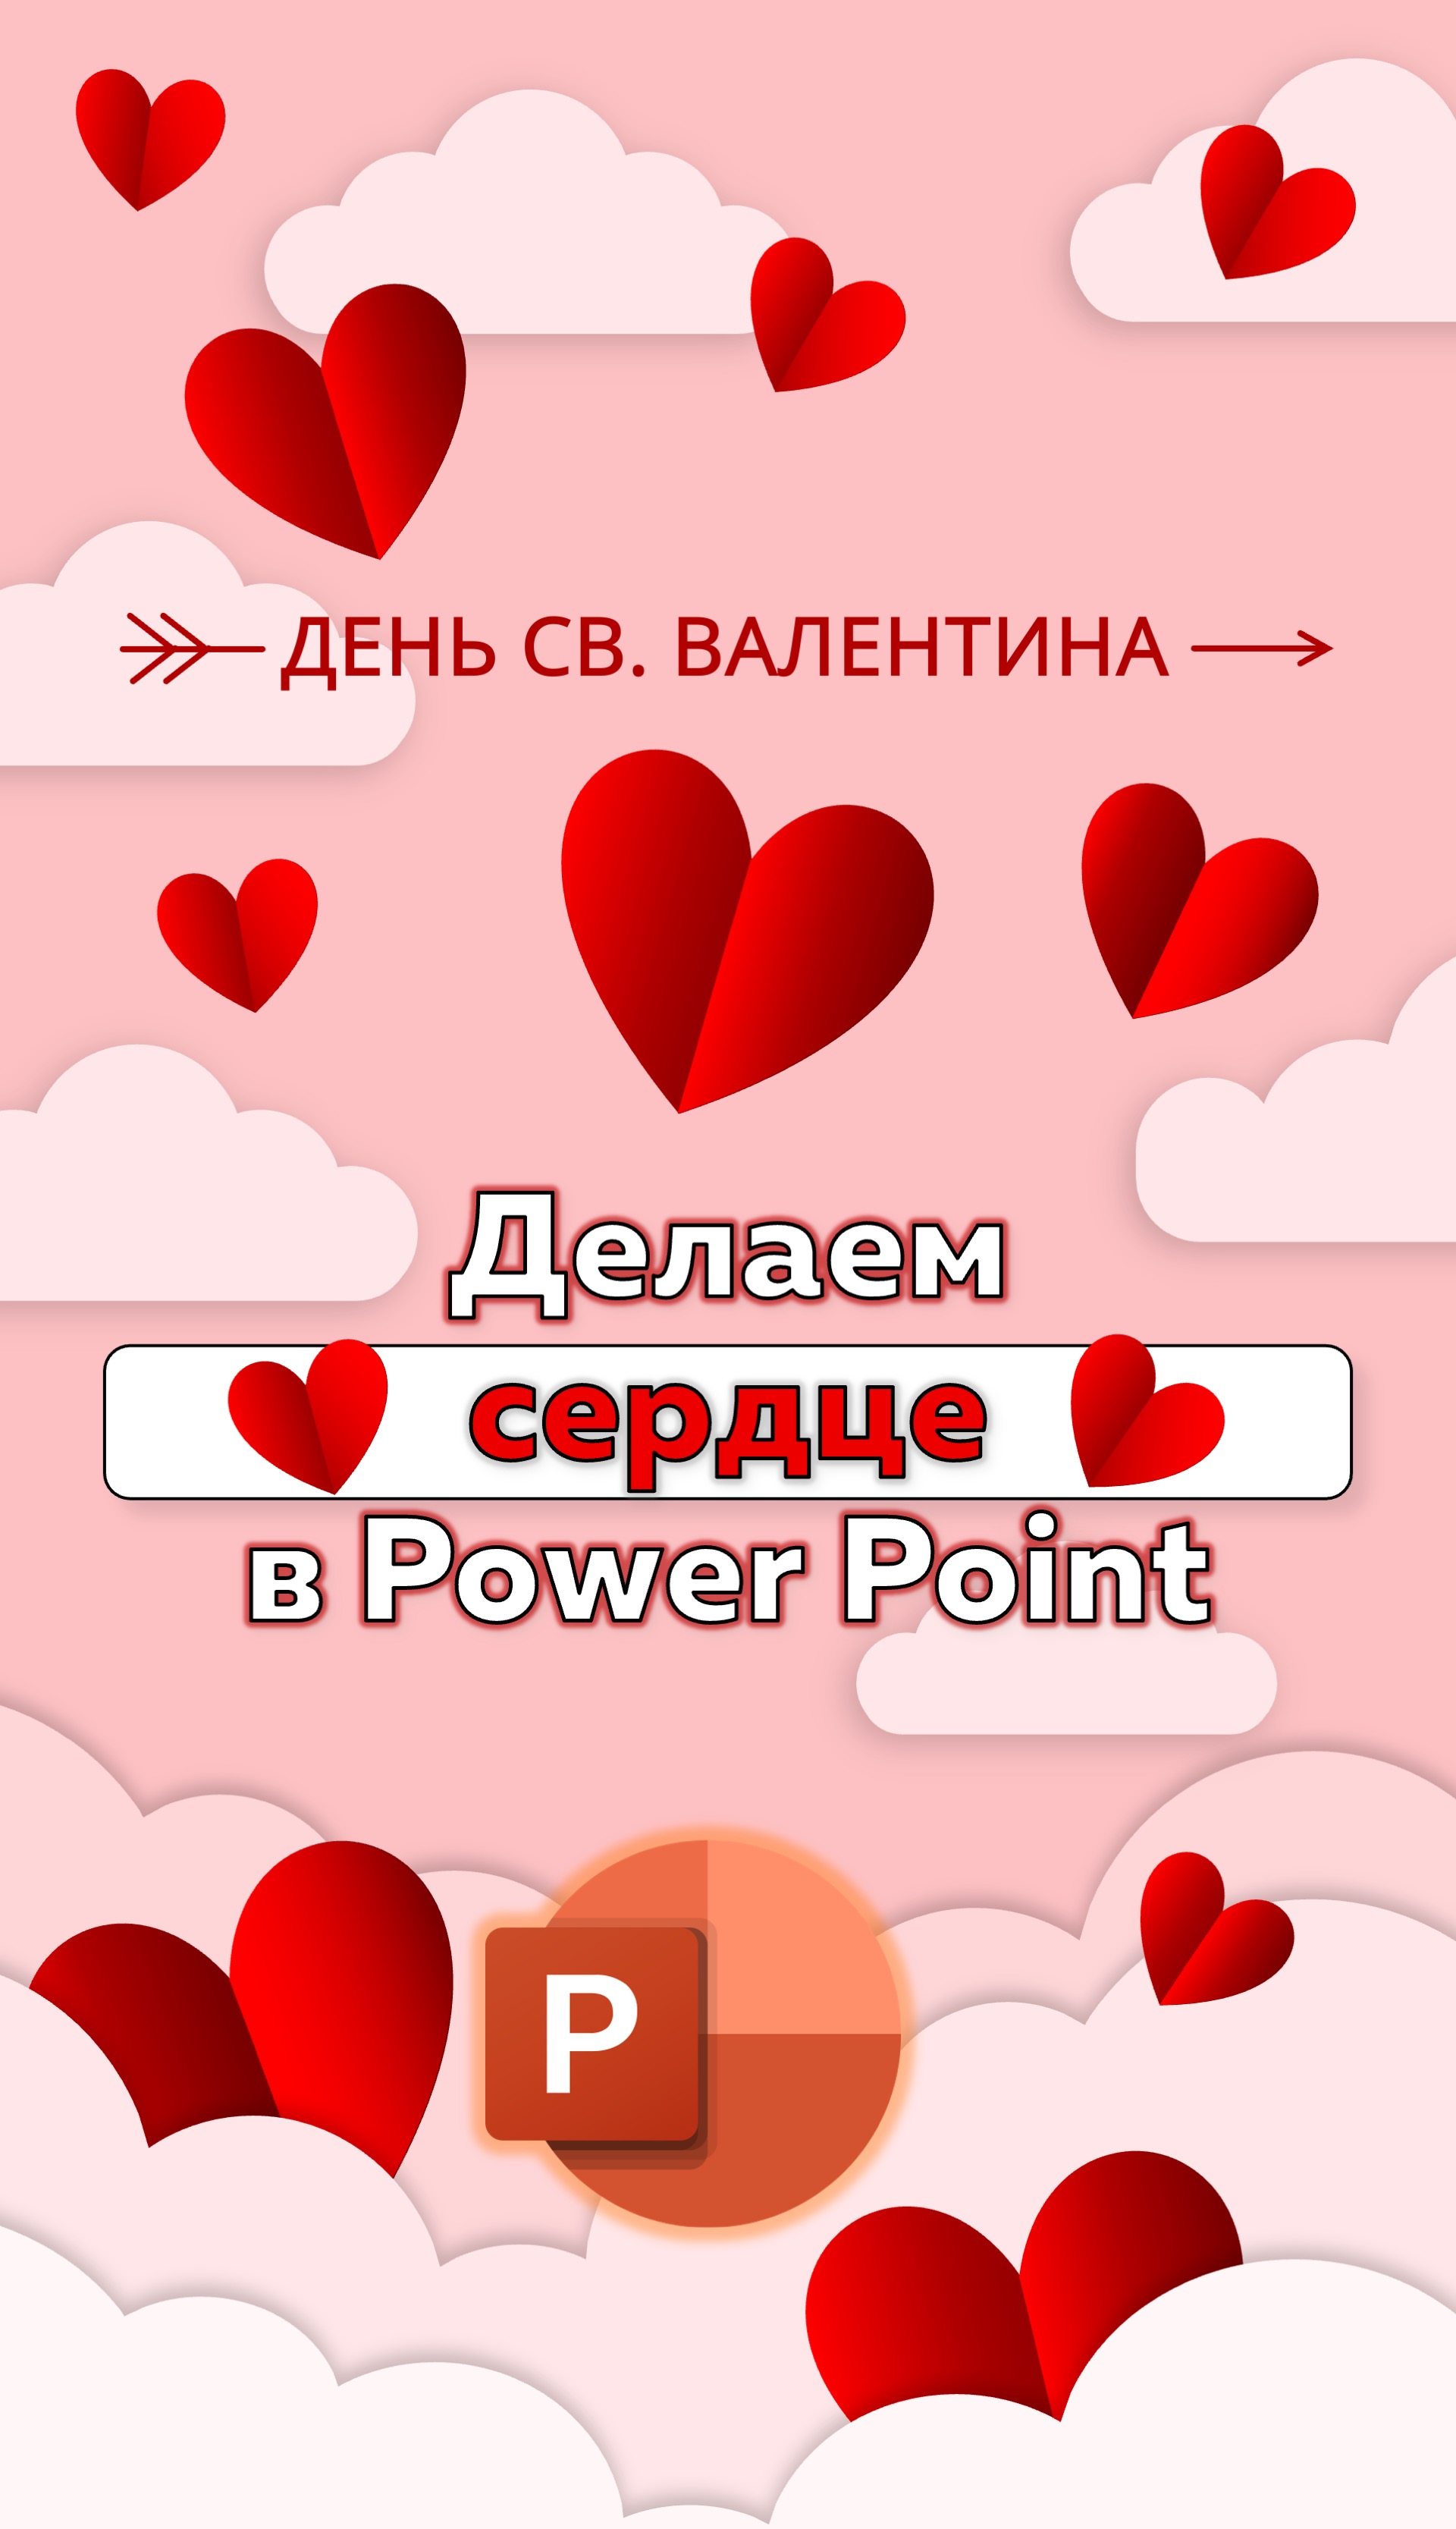 Valentine's Day: Делаем сердце на 14 февраля в Power Point #love #ppt   #template #shablonda